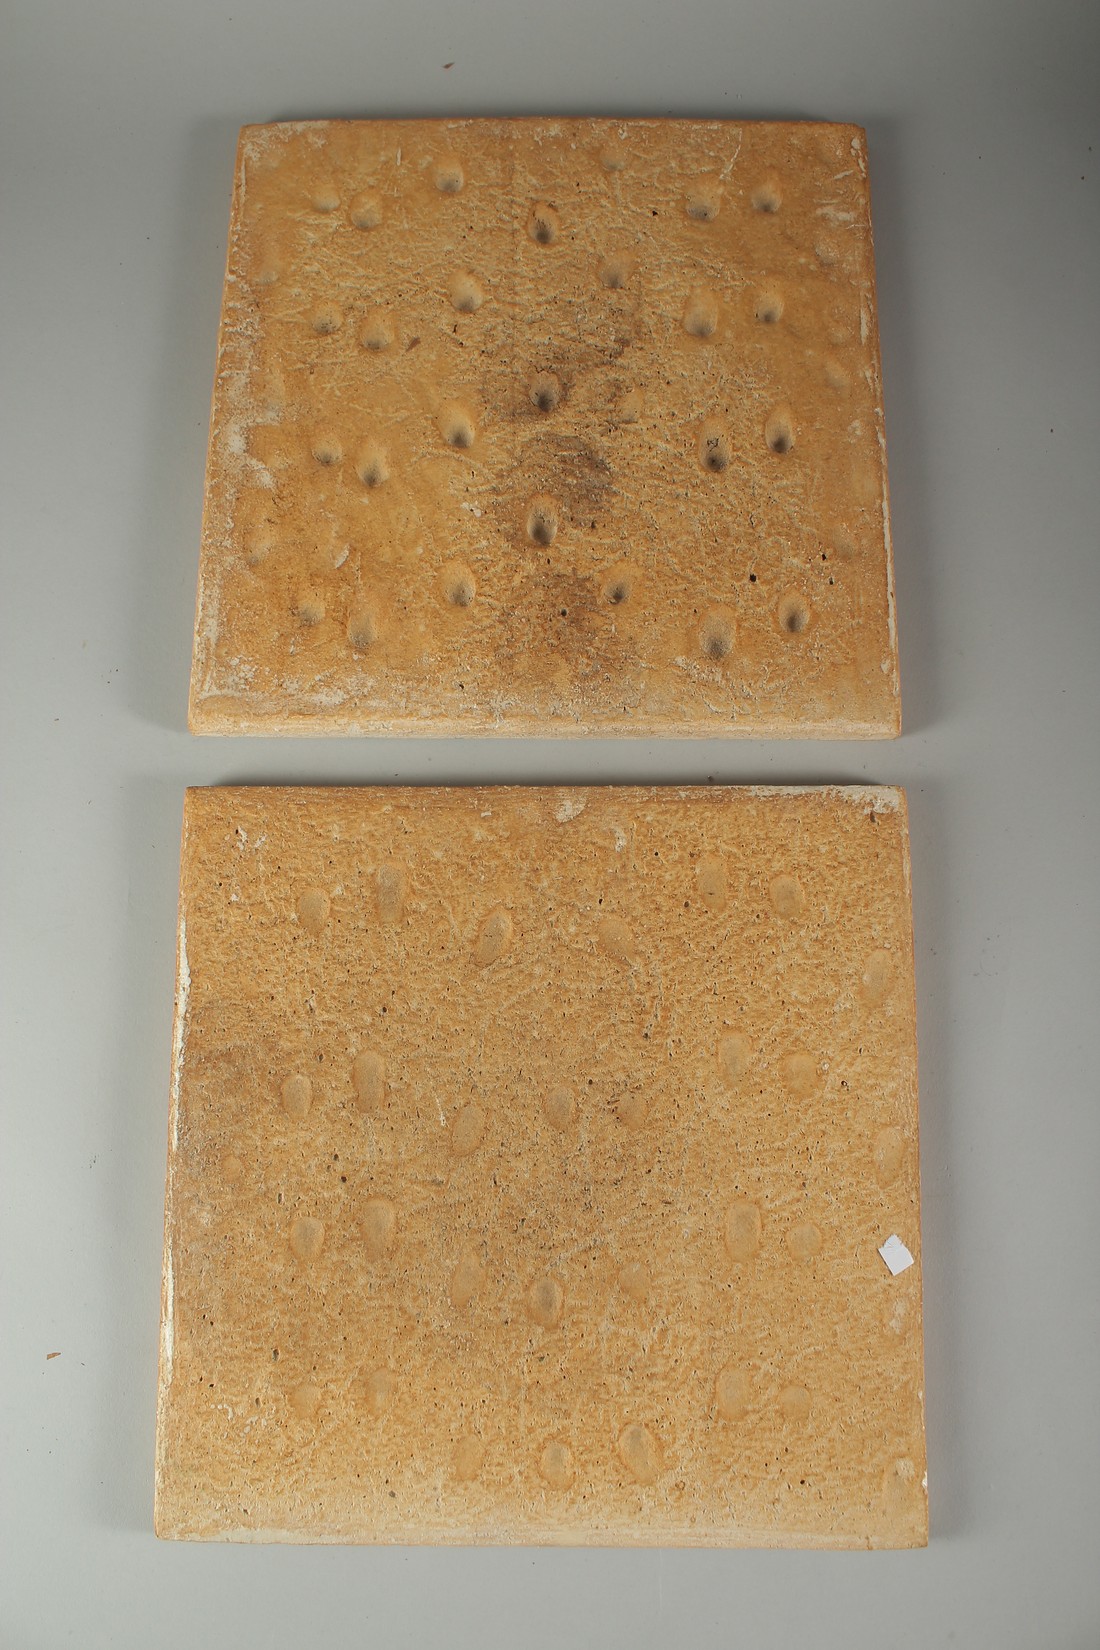 A TWO-PIECE OTTOMAN TURKISH IZNIK POTTERY TILE DEPICTING MECCA, each tile 30cm square, (2). - Image 2 of 2